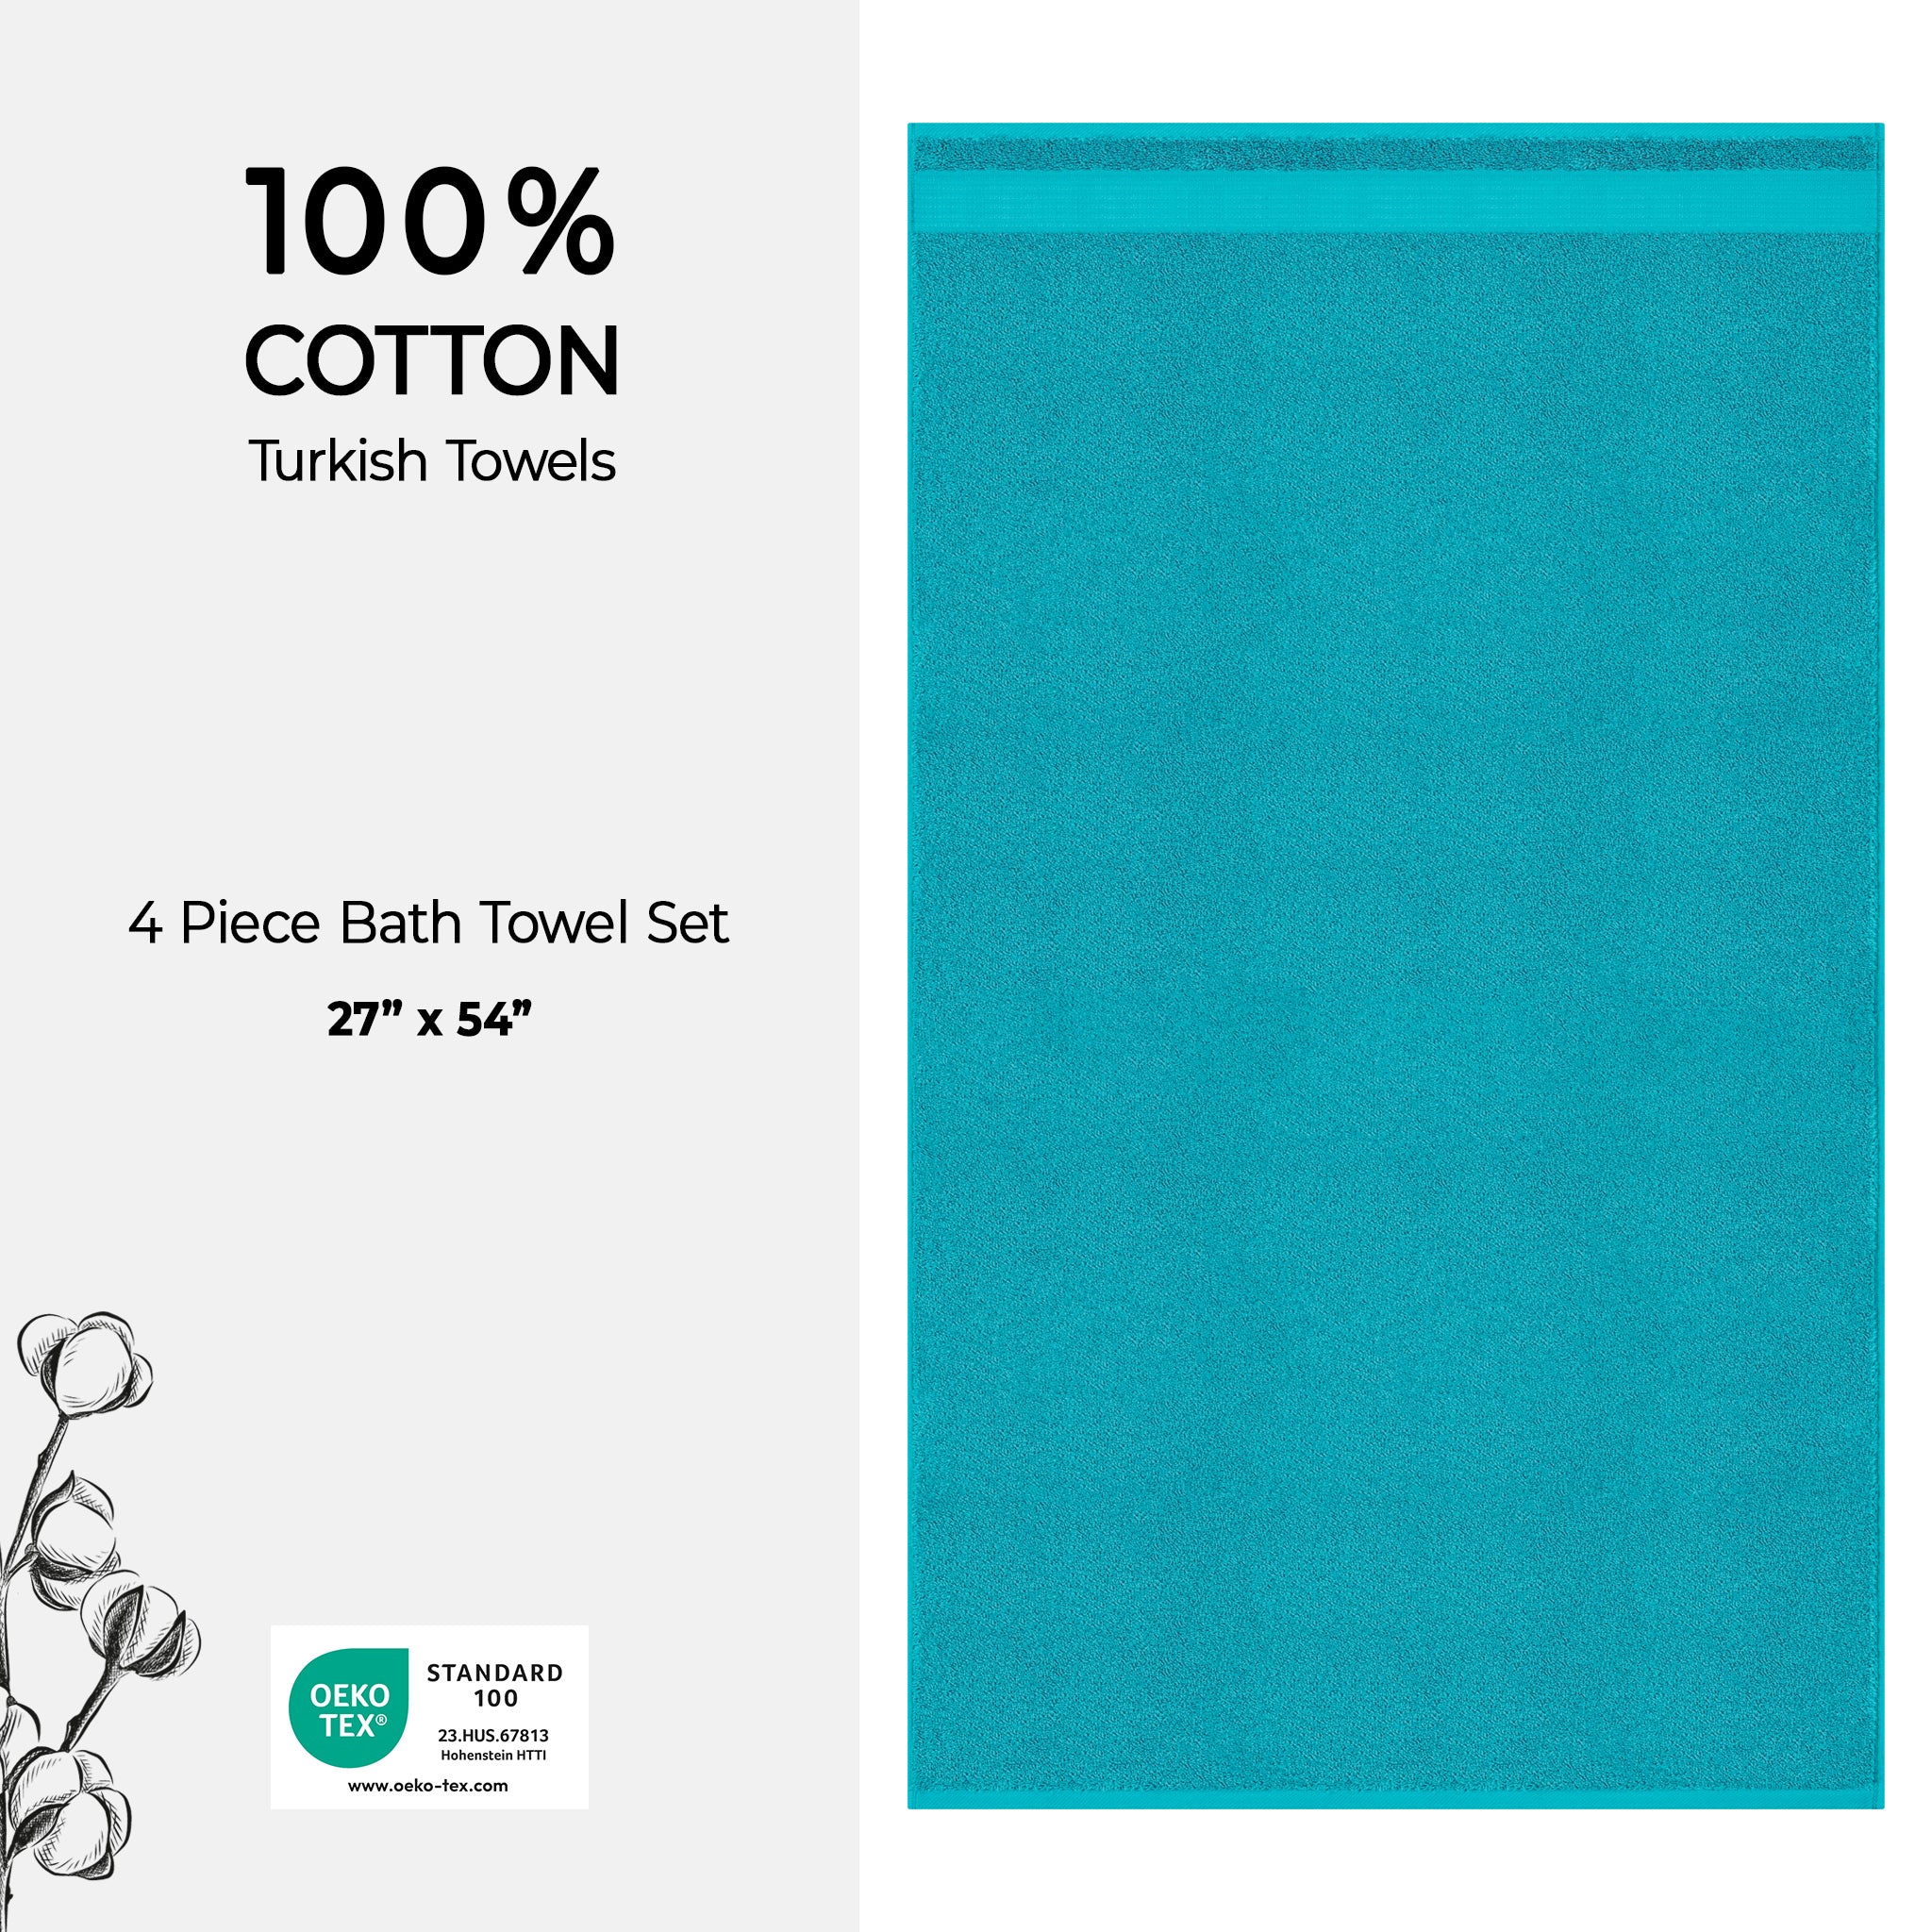 American Soft Linen Bekos 100% Cotton Turkish Towels, 4 Piece Bath Towel Set -aqua-blue-04